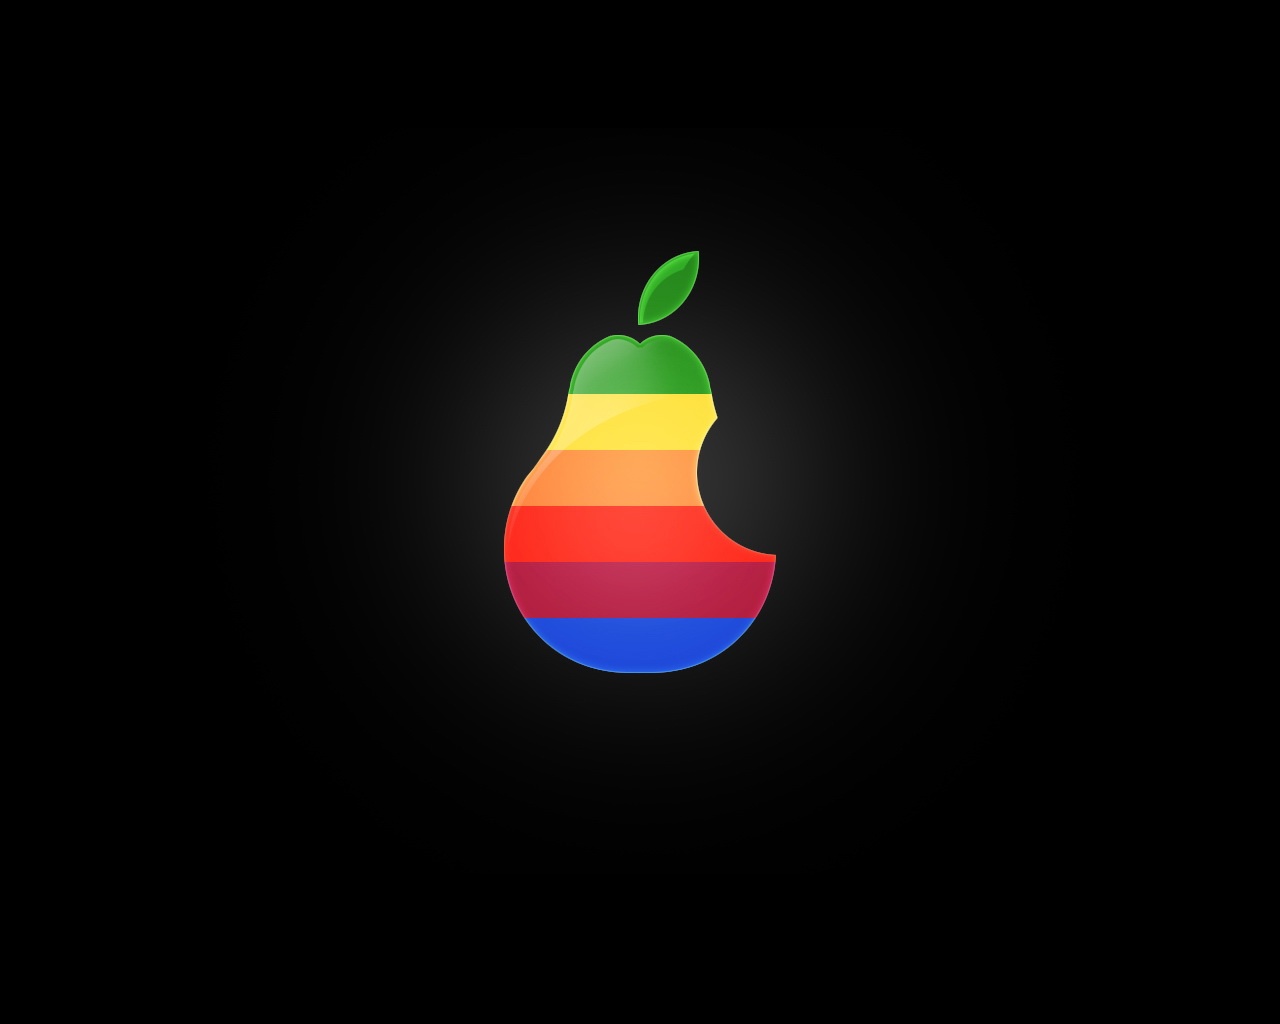 Apple Macintosh Pear Logo Desktop Wallpaper And Stock Photos